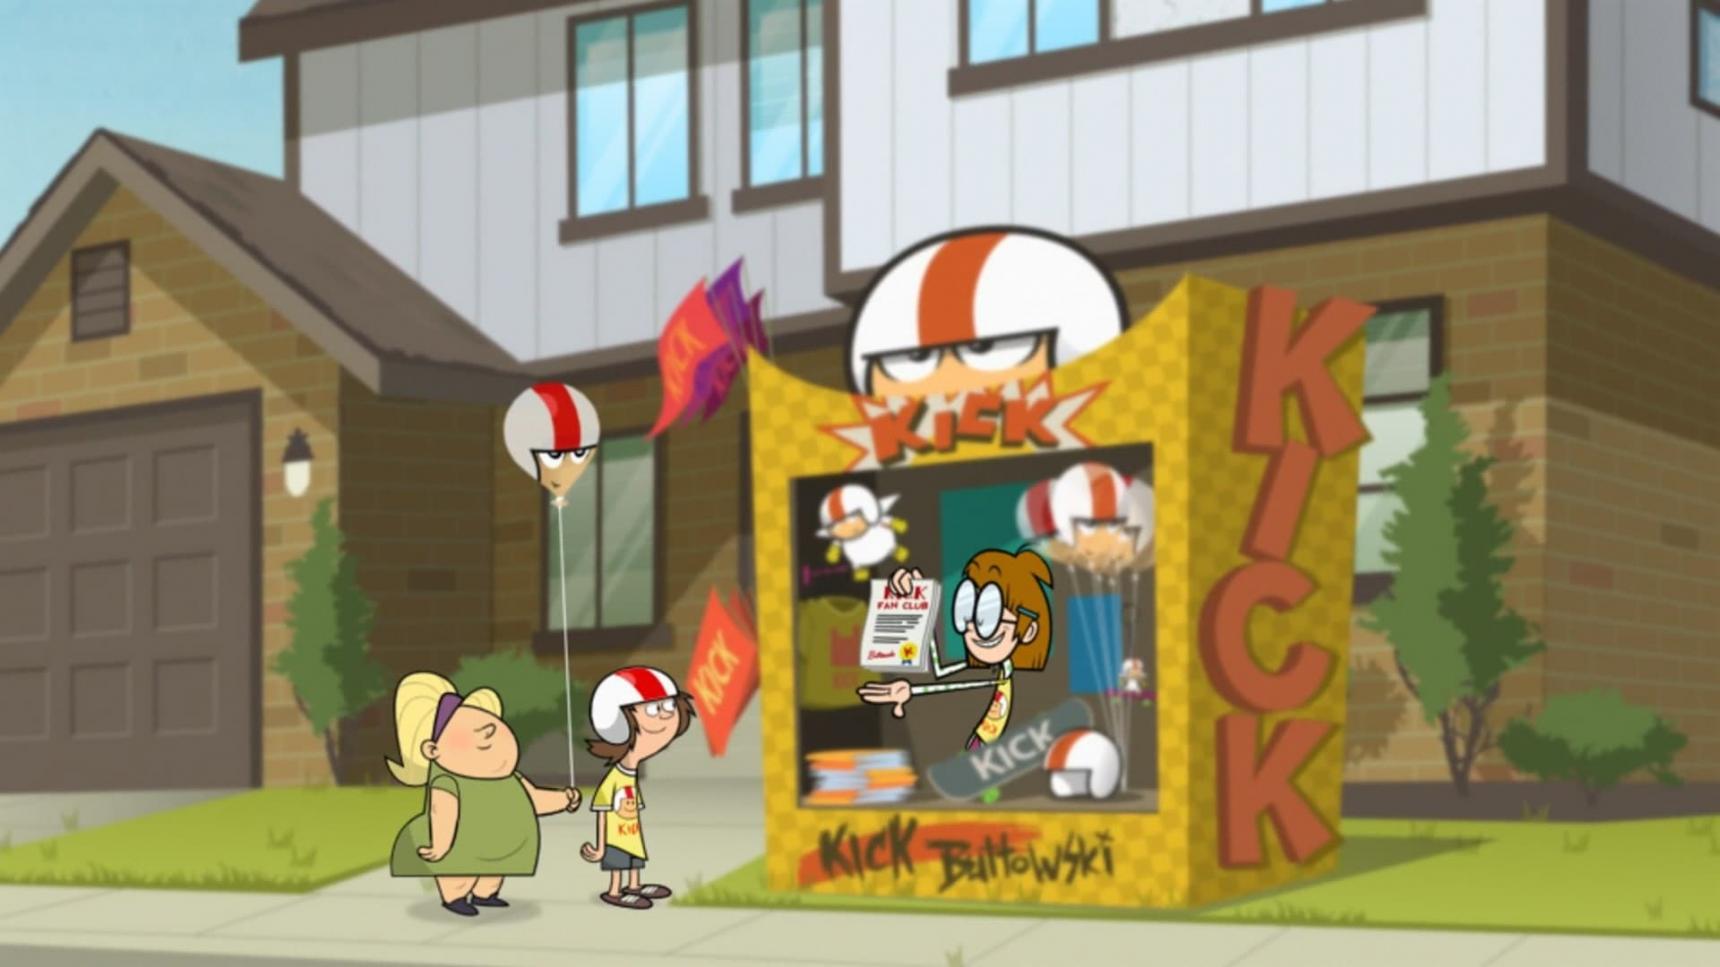 Poster del episodio 6 de Kick Buttowski online